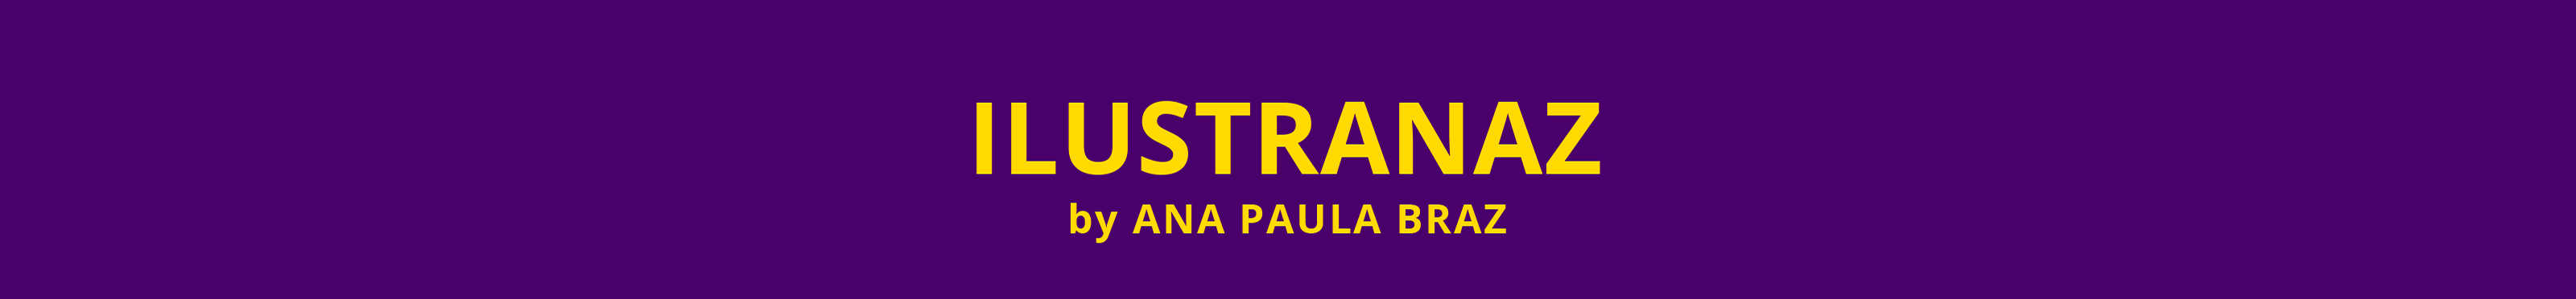 Ana Paula Braz's profile banner